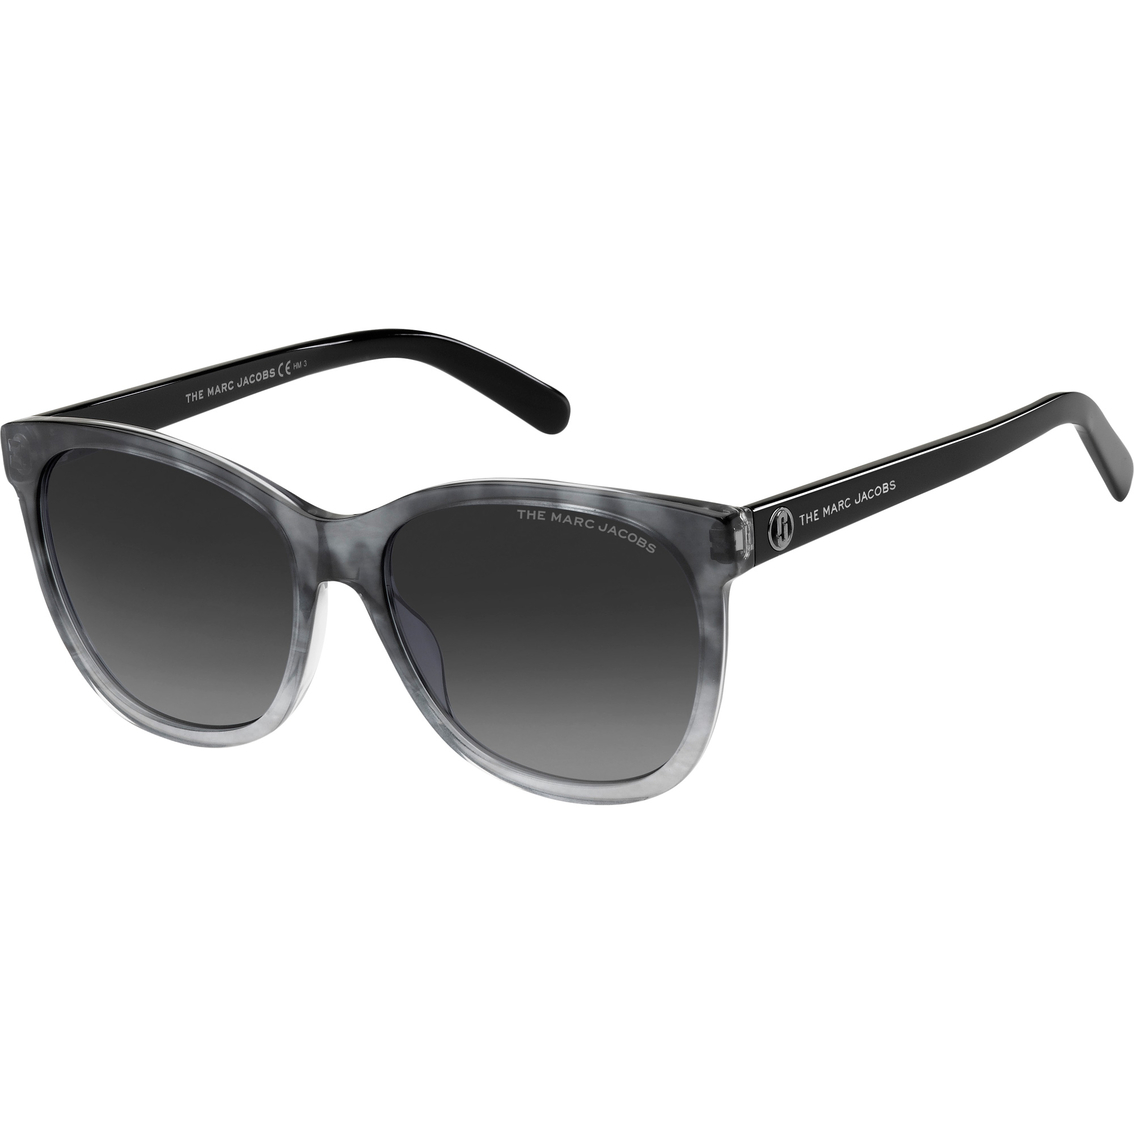 Marc Jacobs 527/s Square Sunglasses Marc527s | Sunglasses | Clothing ...